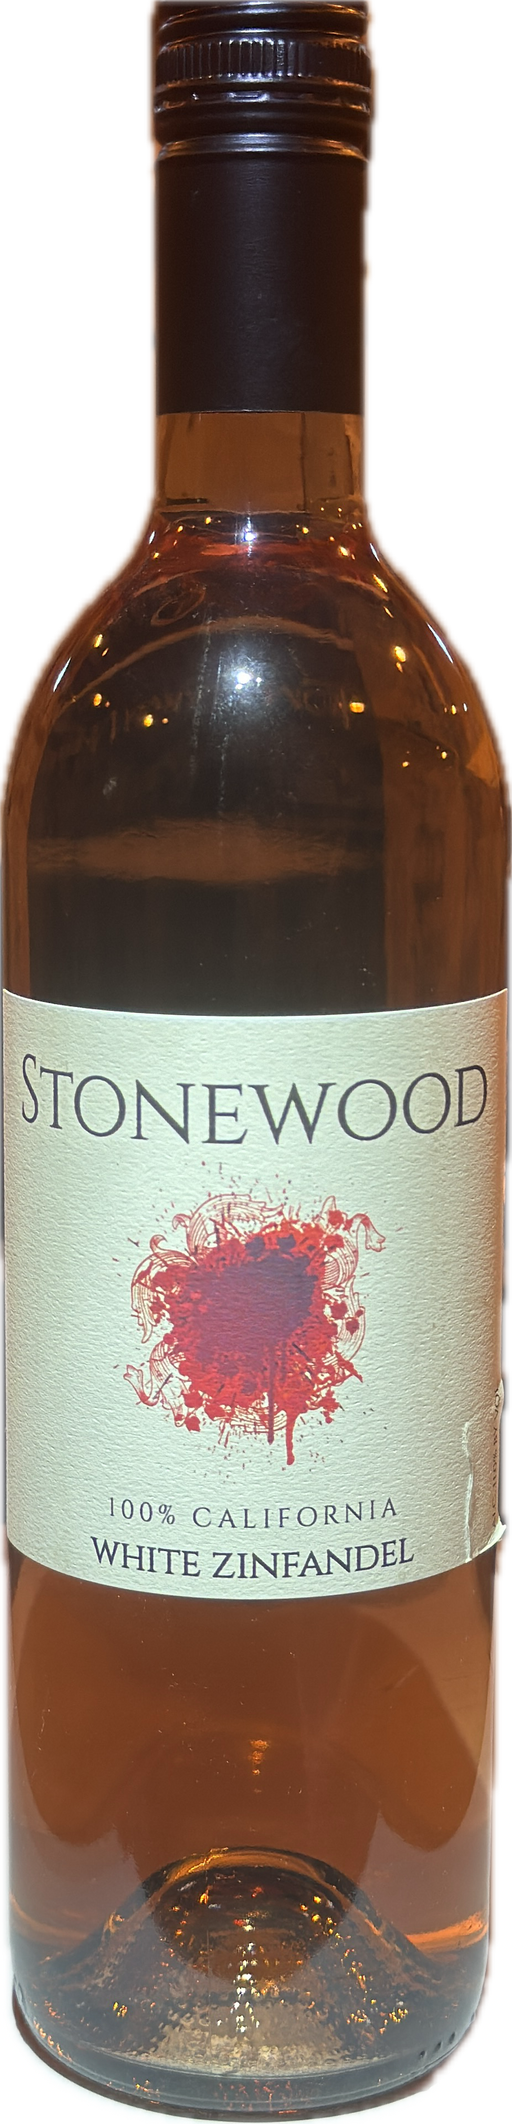 Stonewood White zinfandel 20NV - VineChain